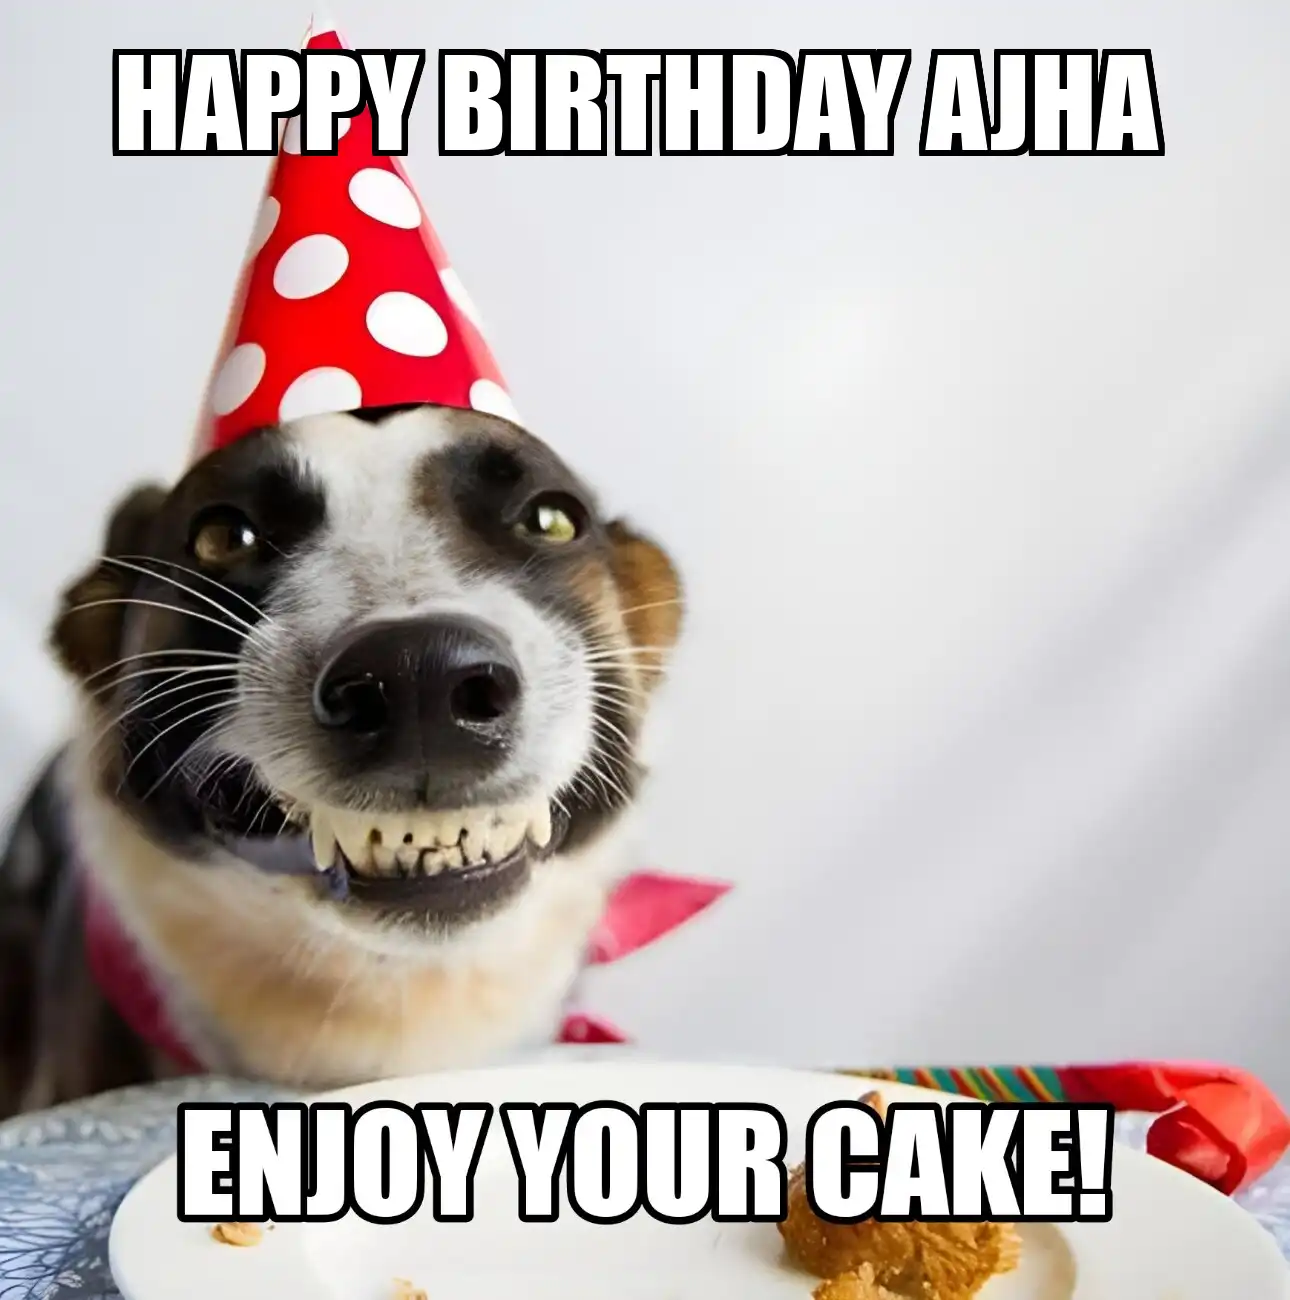 Happy Birthday Ajha Enjoy Your Cake Dog Meme